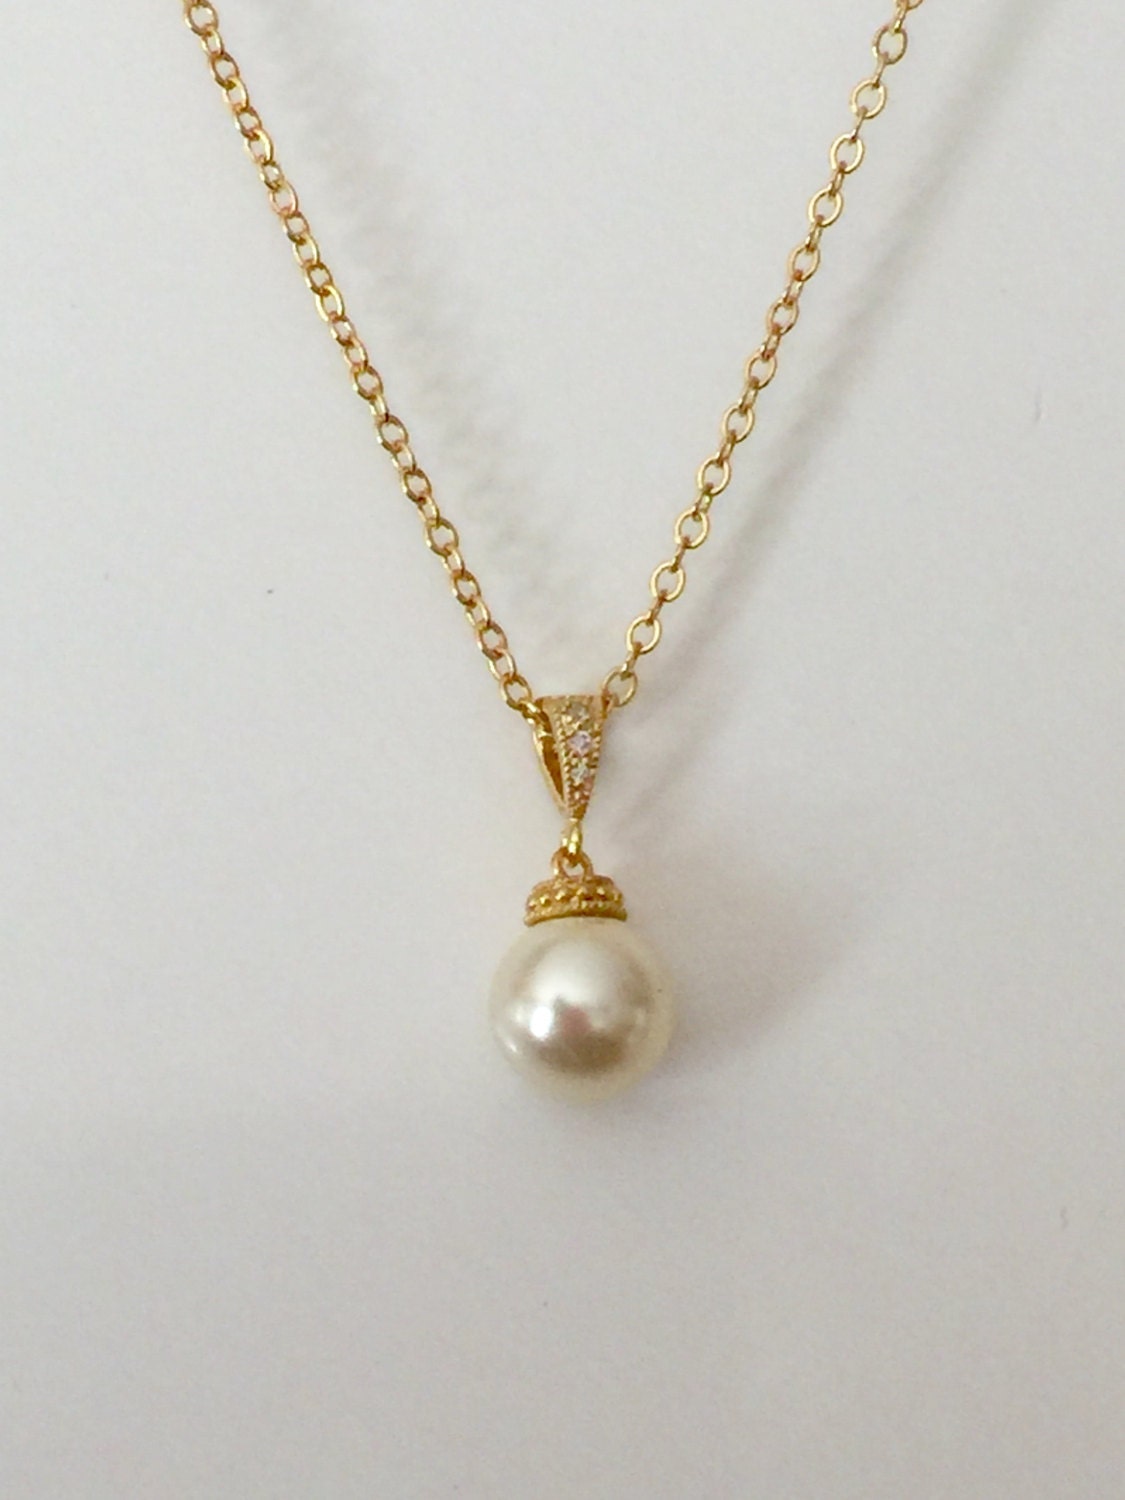 Gold Pearl pendant, Pearl necklace, bridesmaid jewelry, Swarovski Pearl, pendant necklace